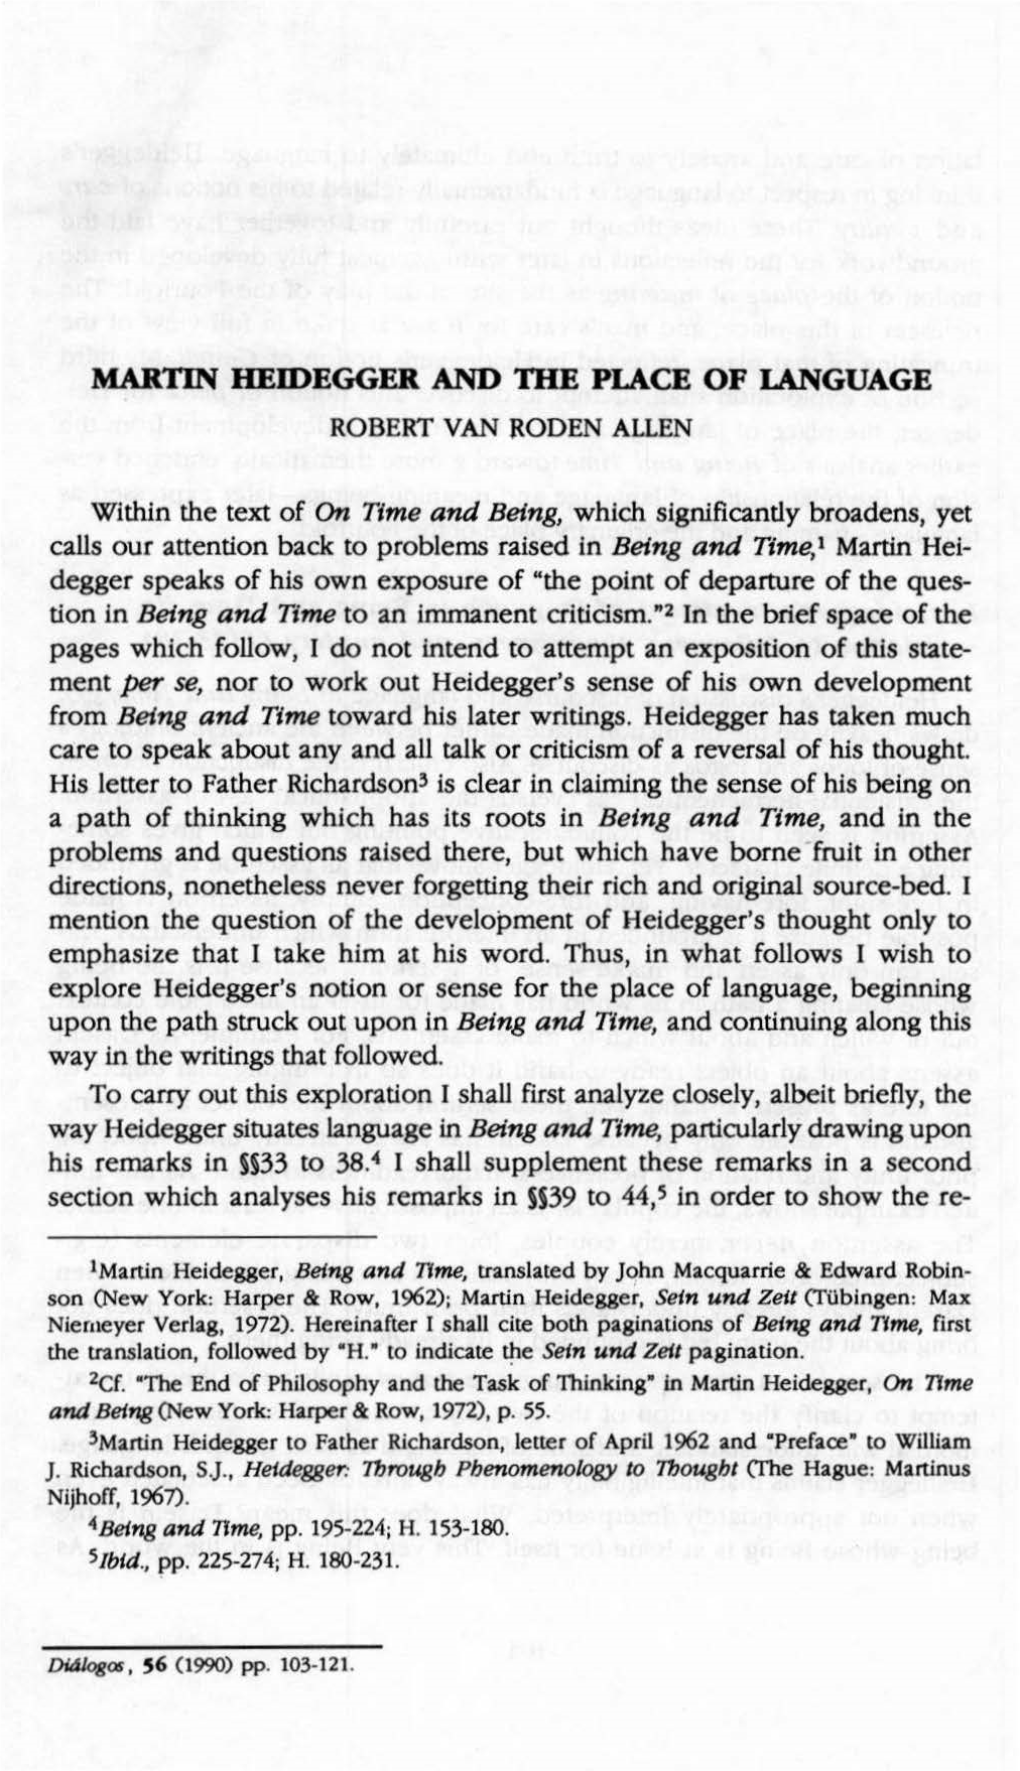 Mar11n Heidegger and the Place of Language Robert Van Roden Allen